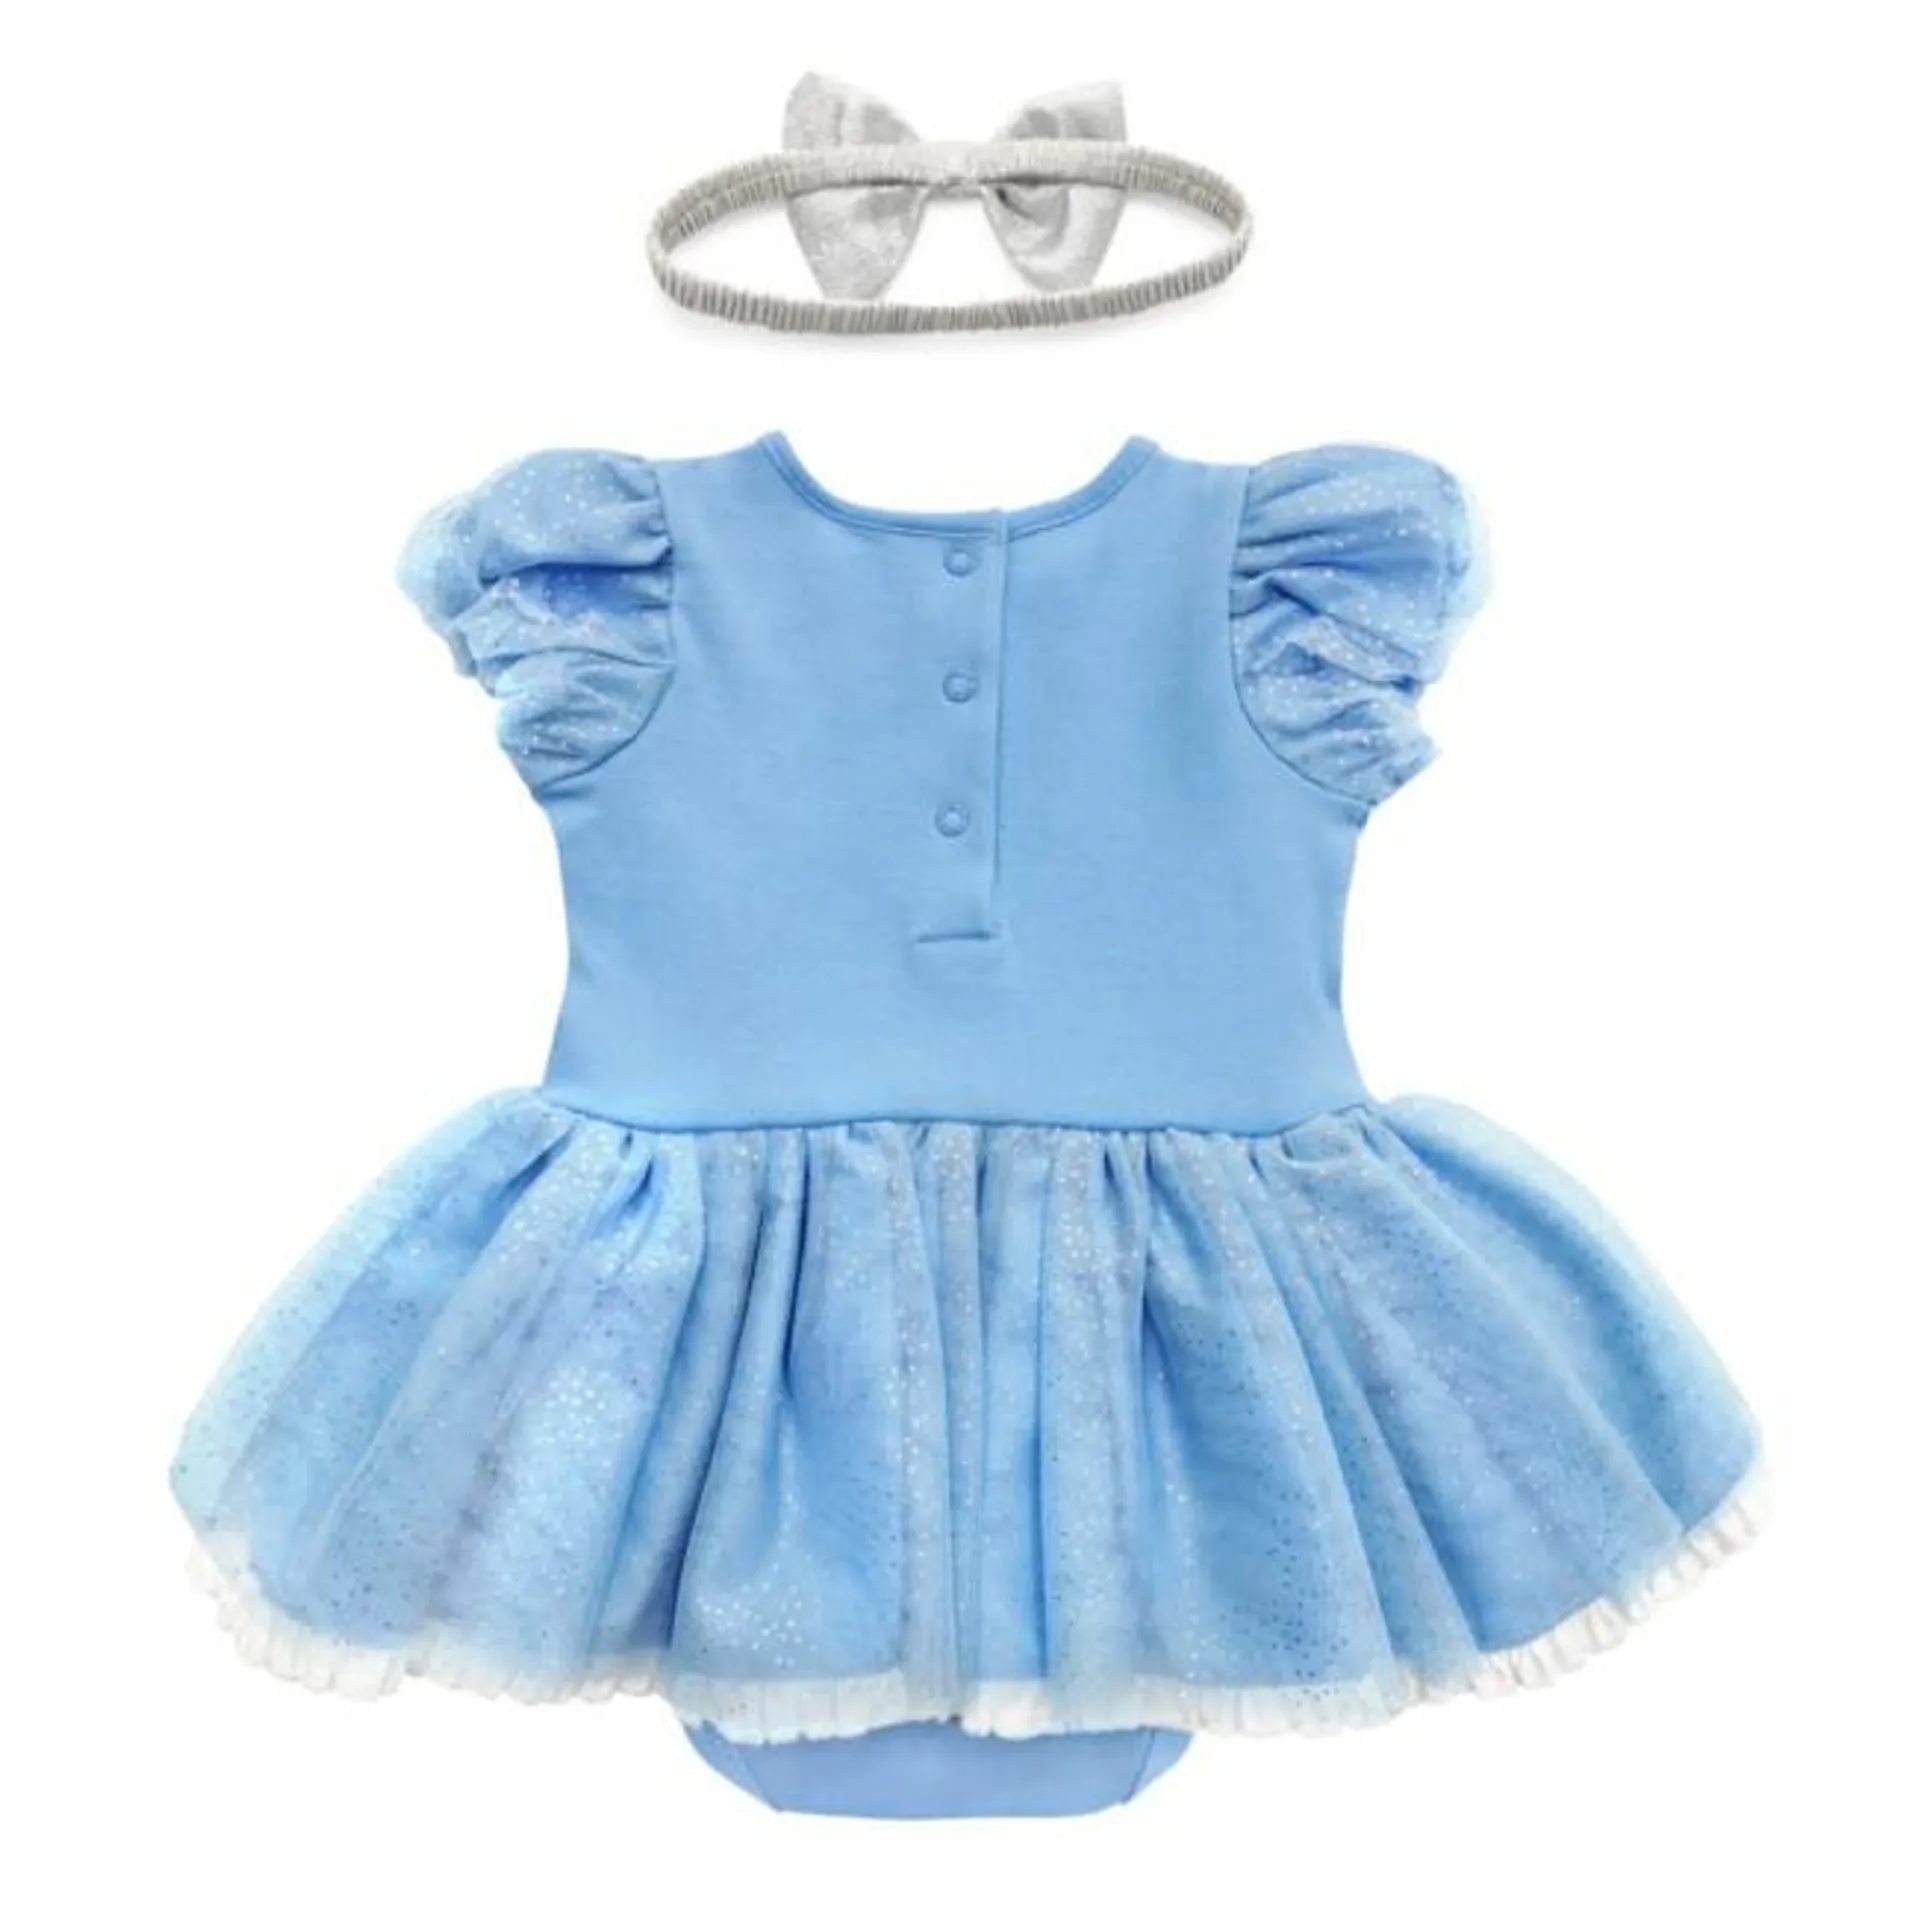 Disney Store Cinderella Baby Costume Body Suit